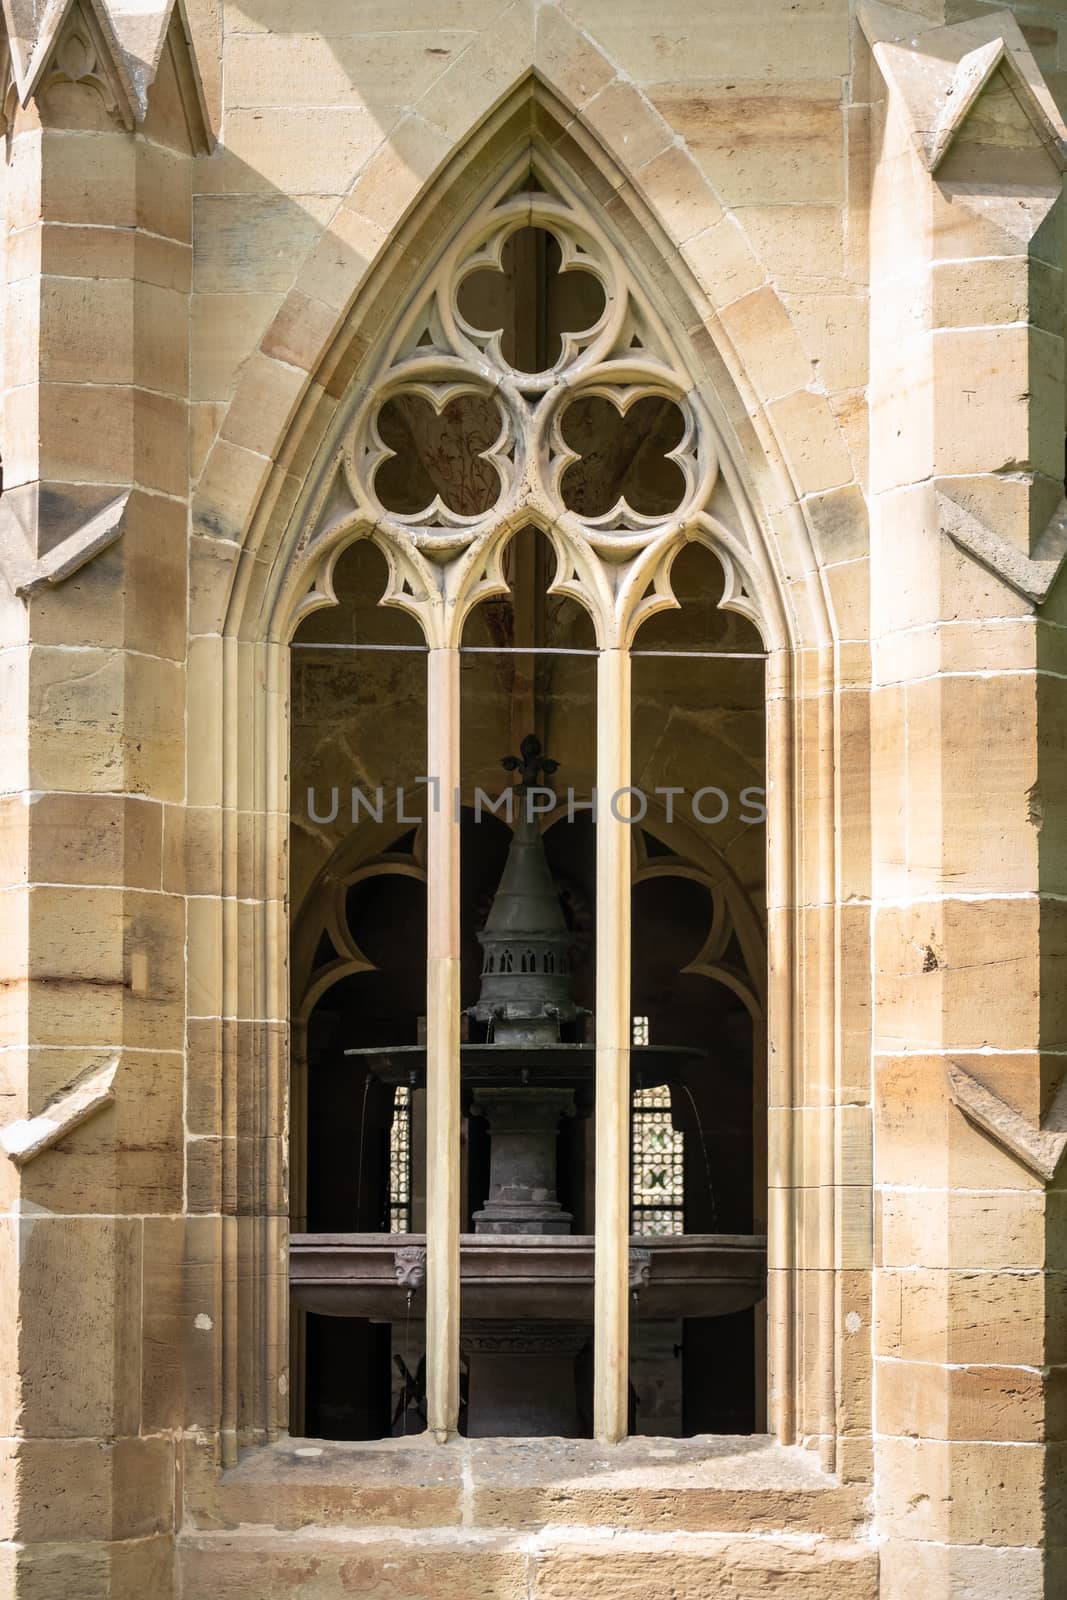 An image of a window of the monastery Maulbronn south Germany